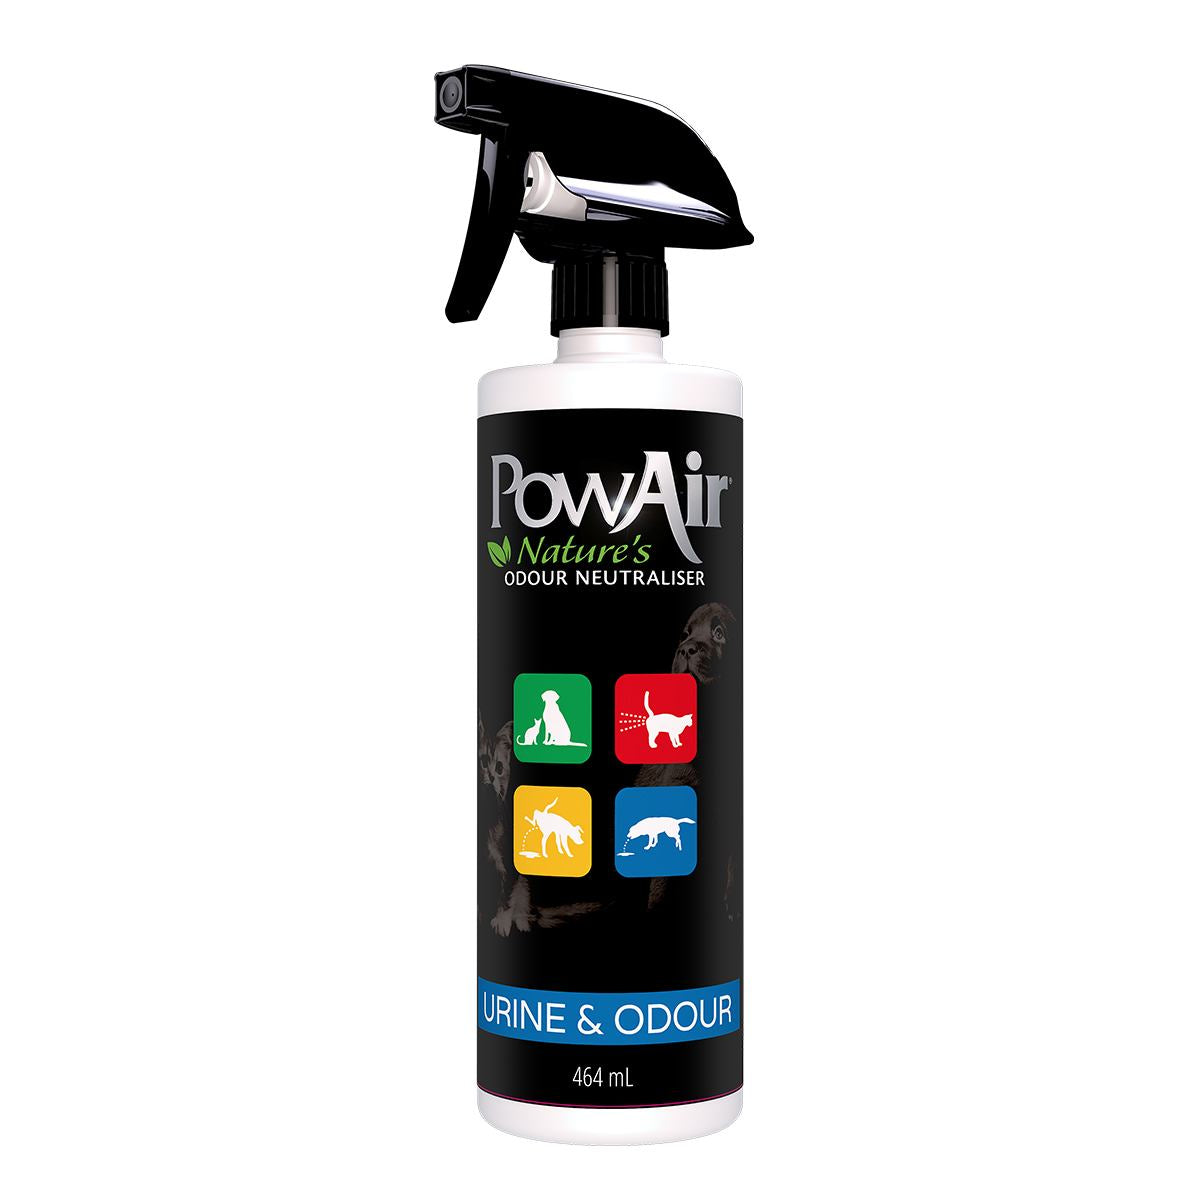 PowAir Urine & Odour Spray & Refills